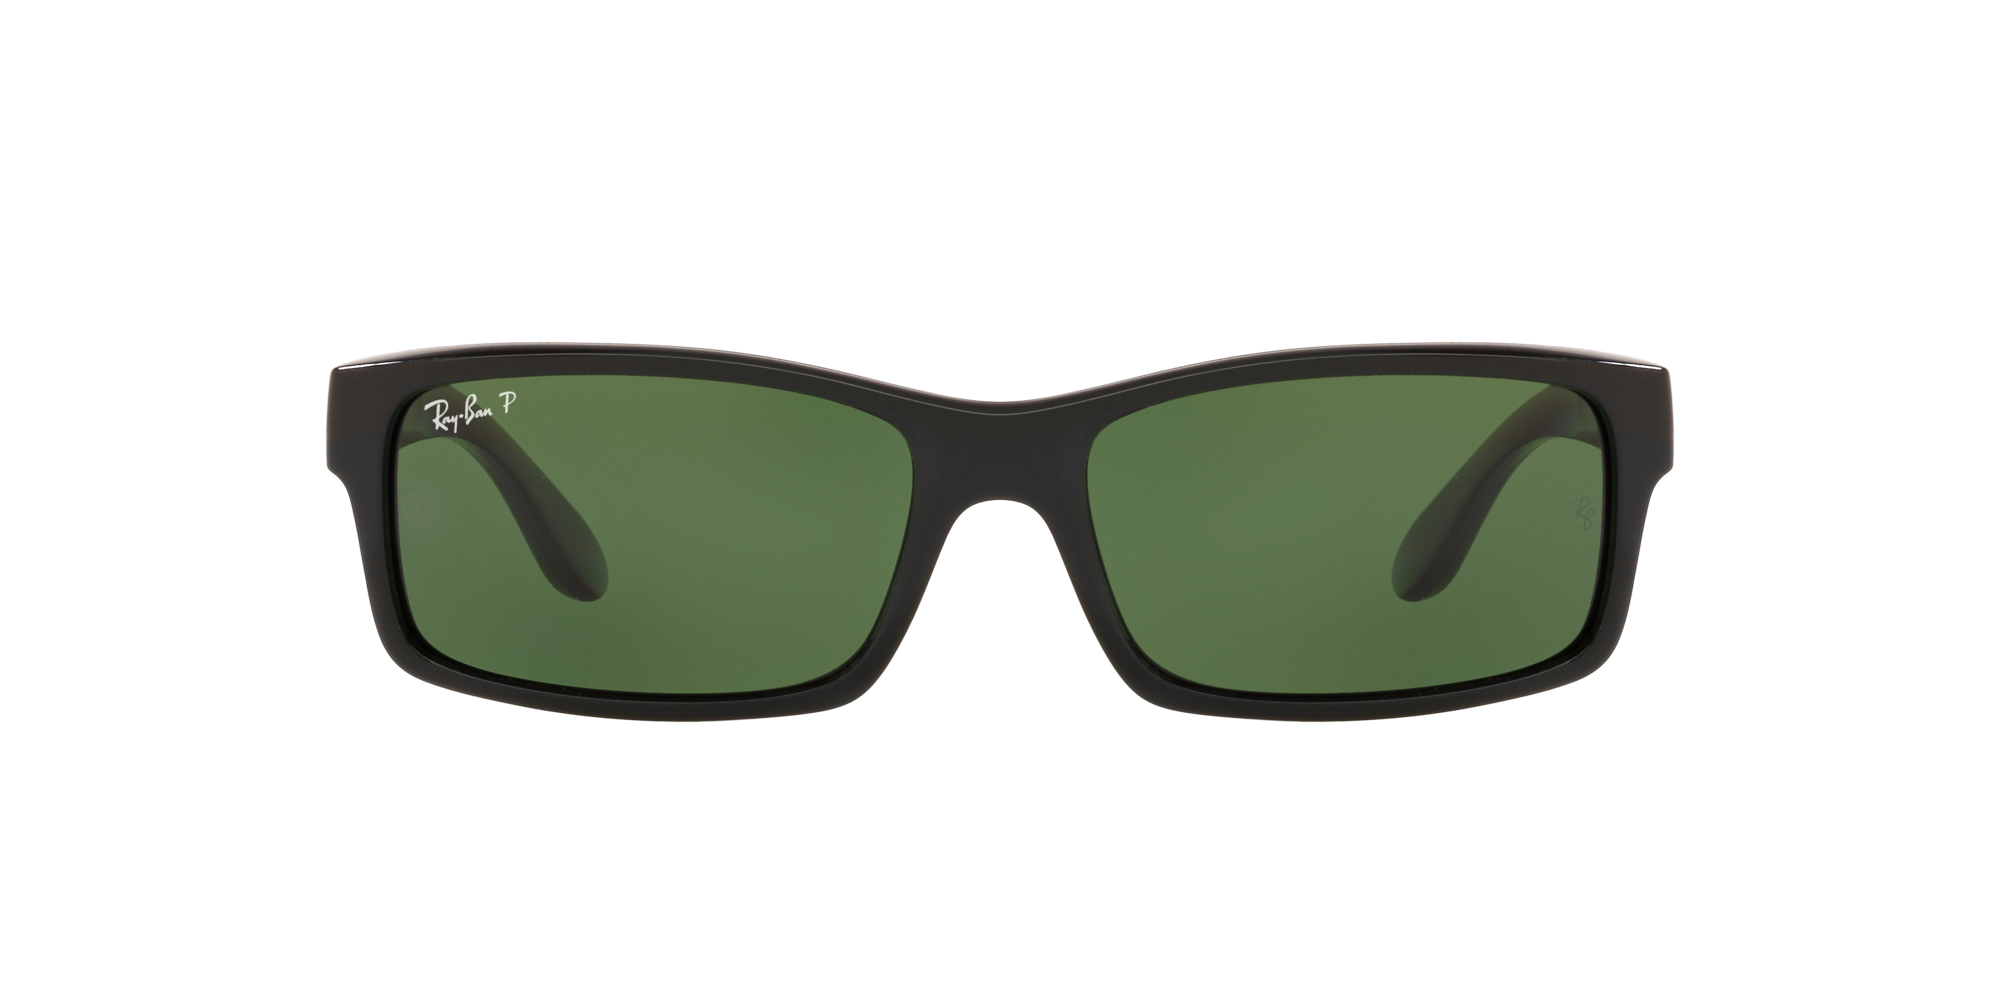 RAY-BAN POLARIZED Sunglasses RB4151 601/2P 59mm Black/Green G-15 NEW Italy  | eBay